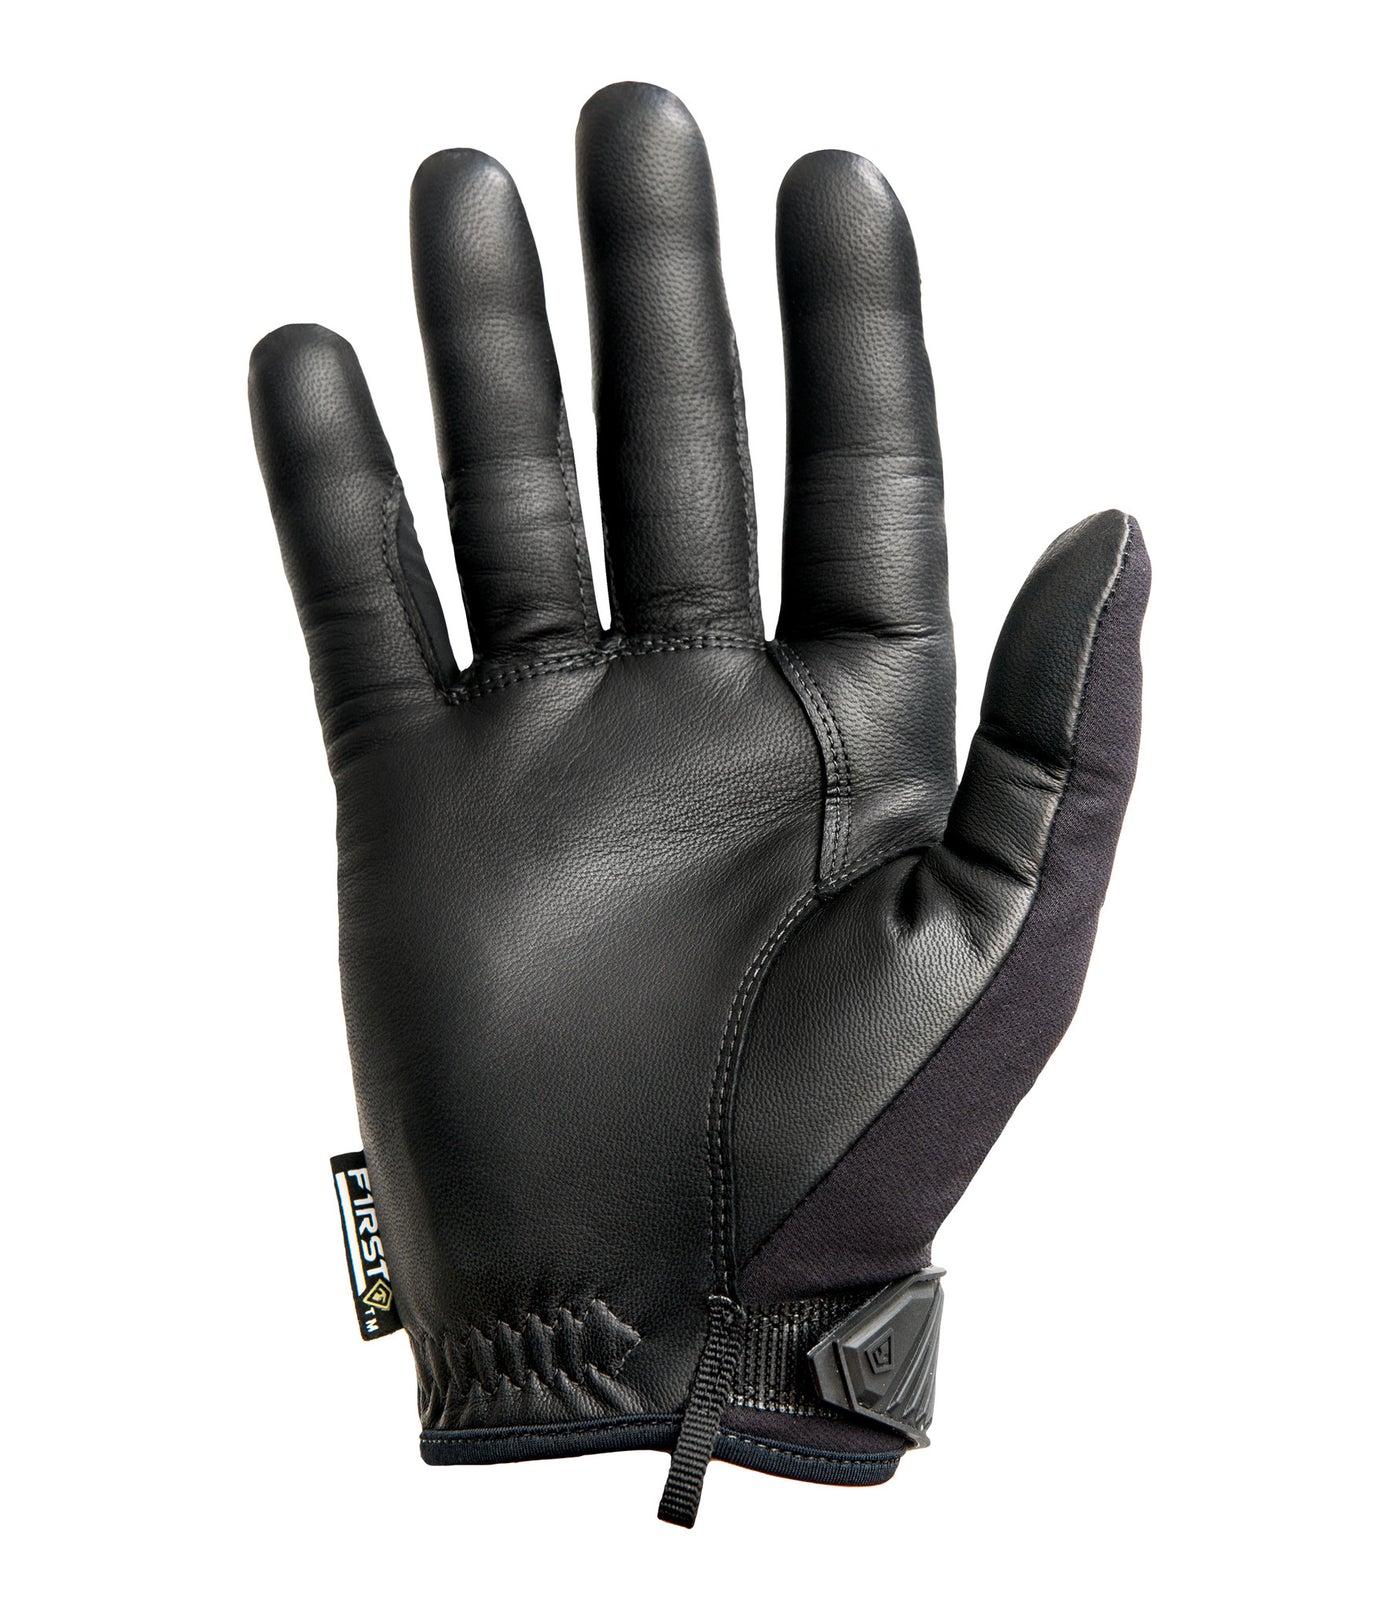 Palm of Men's Pro Knuckle Glove in Black